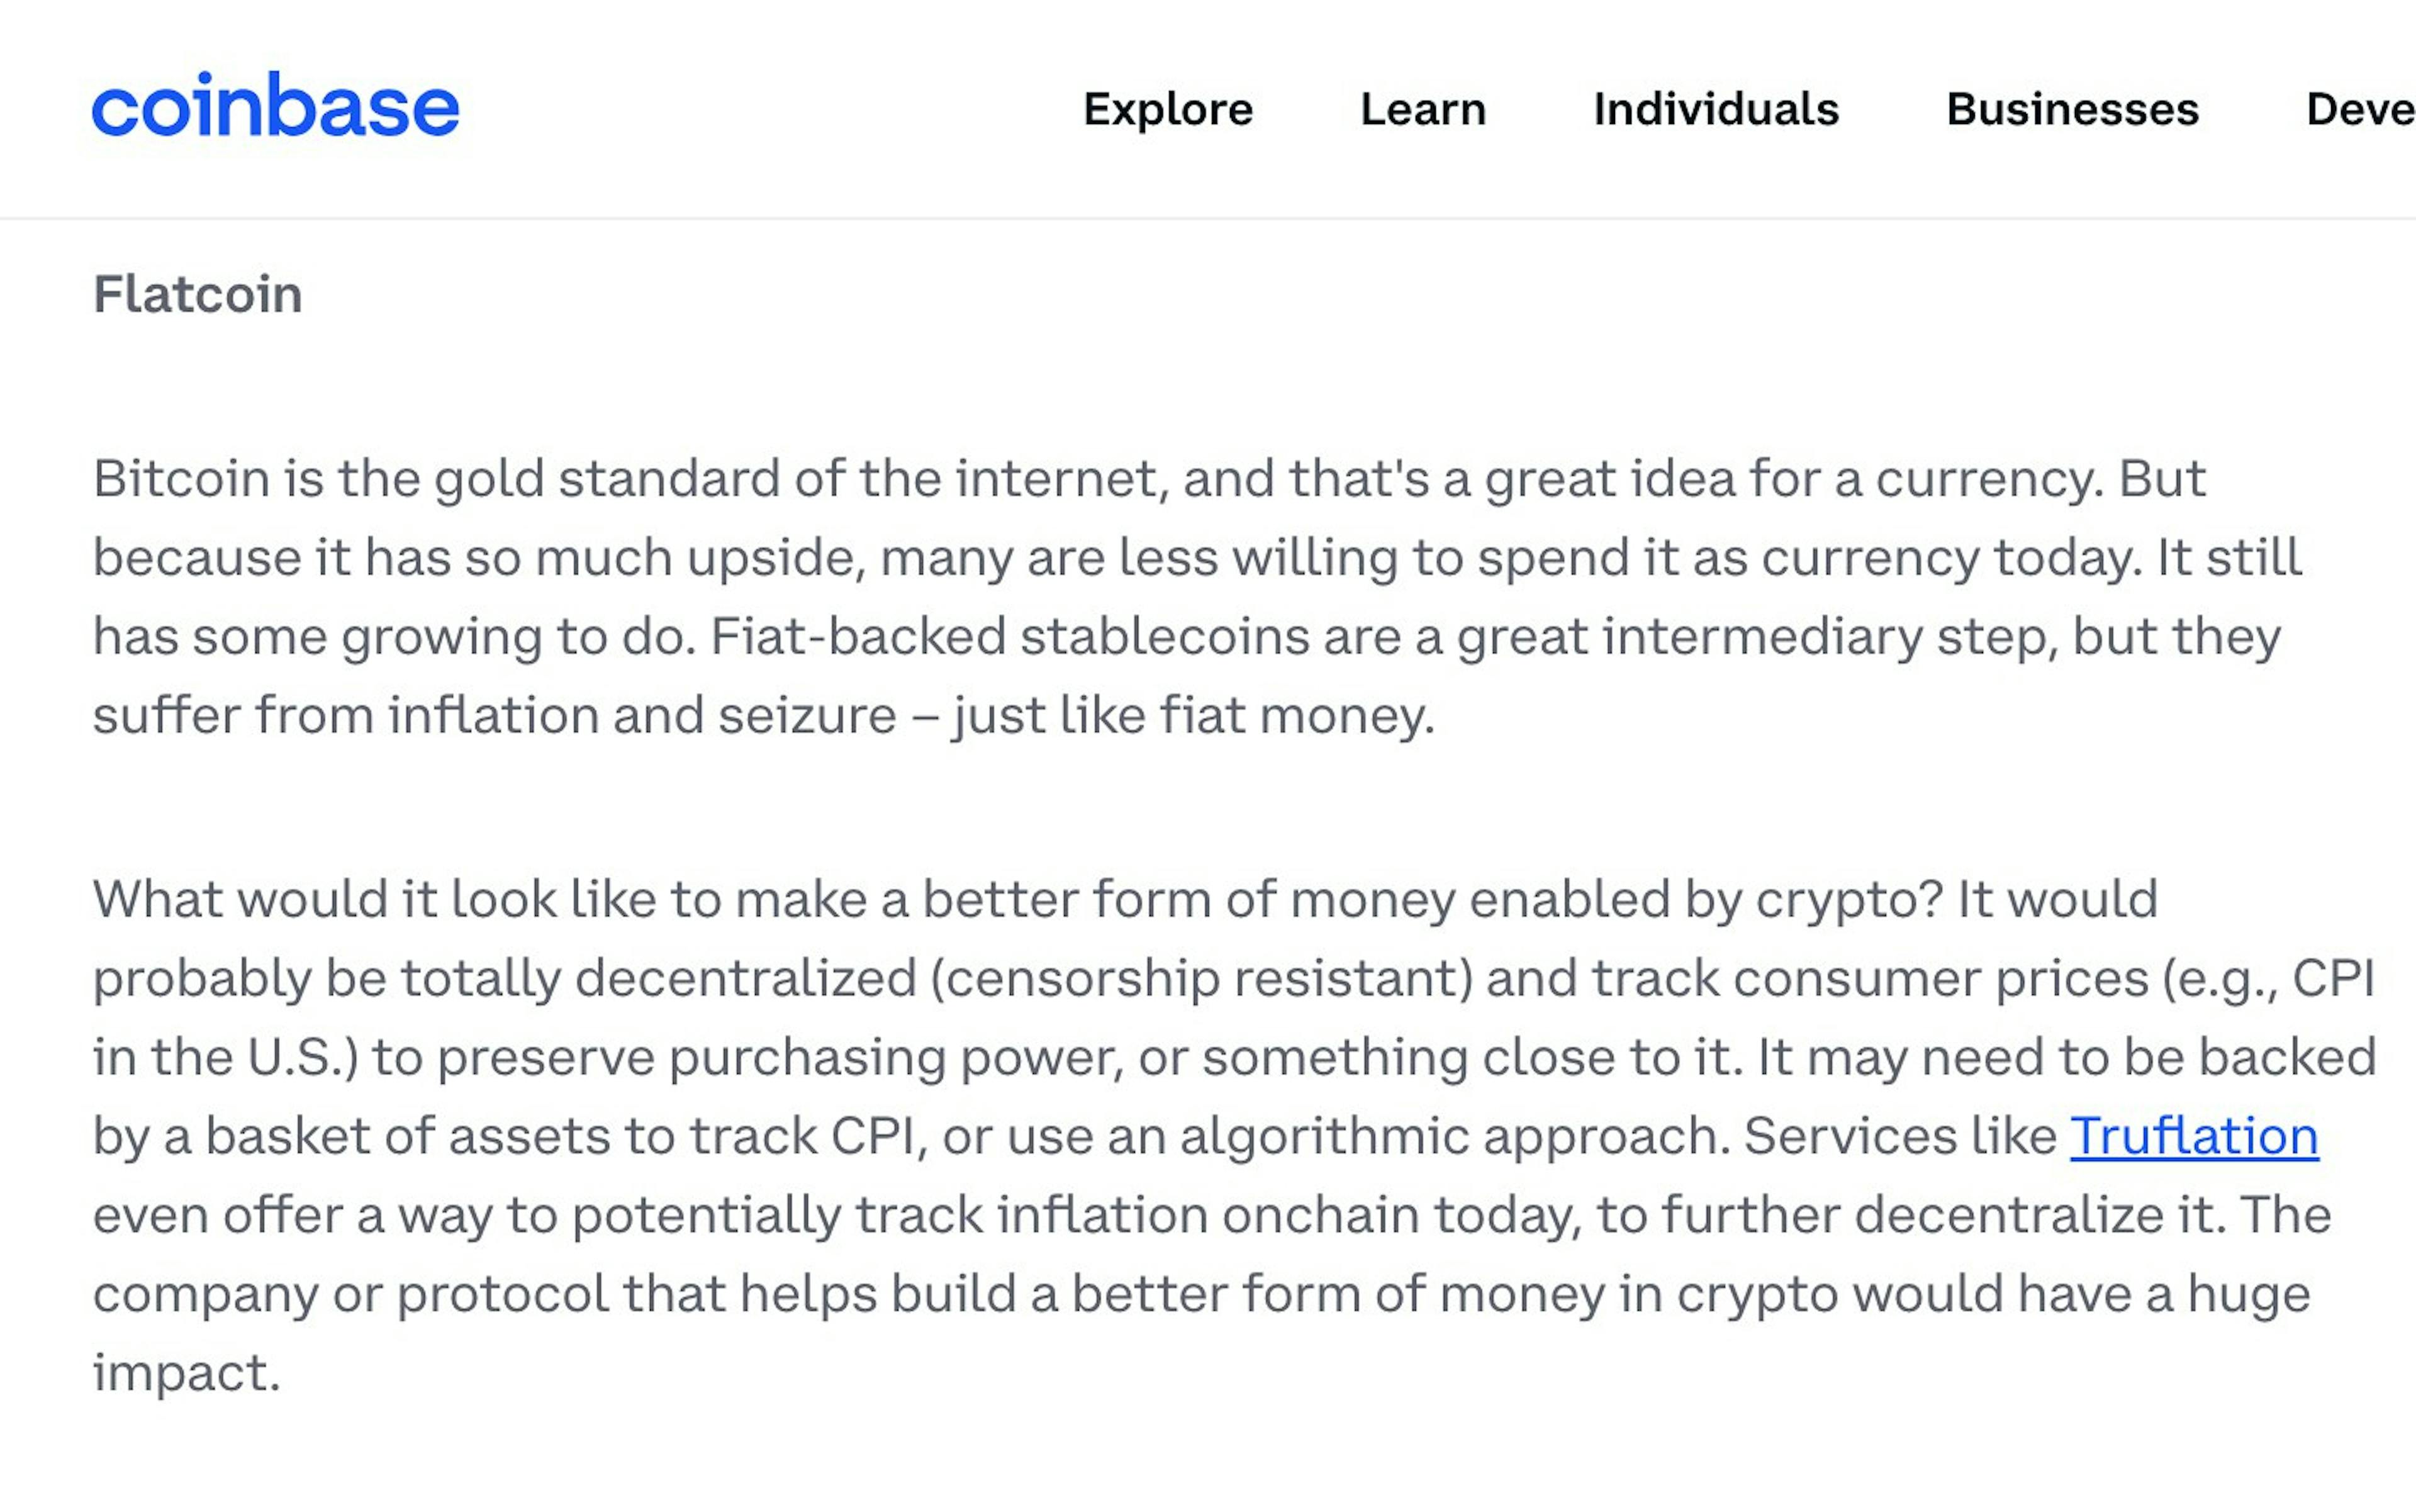 Screenshot of Flatcoin idea from coinbase